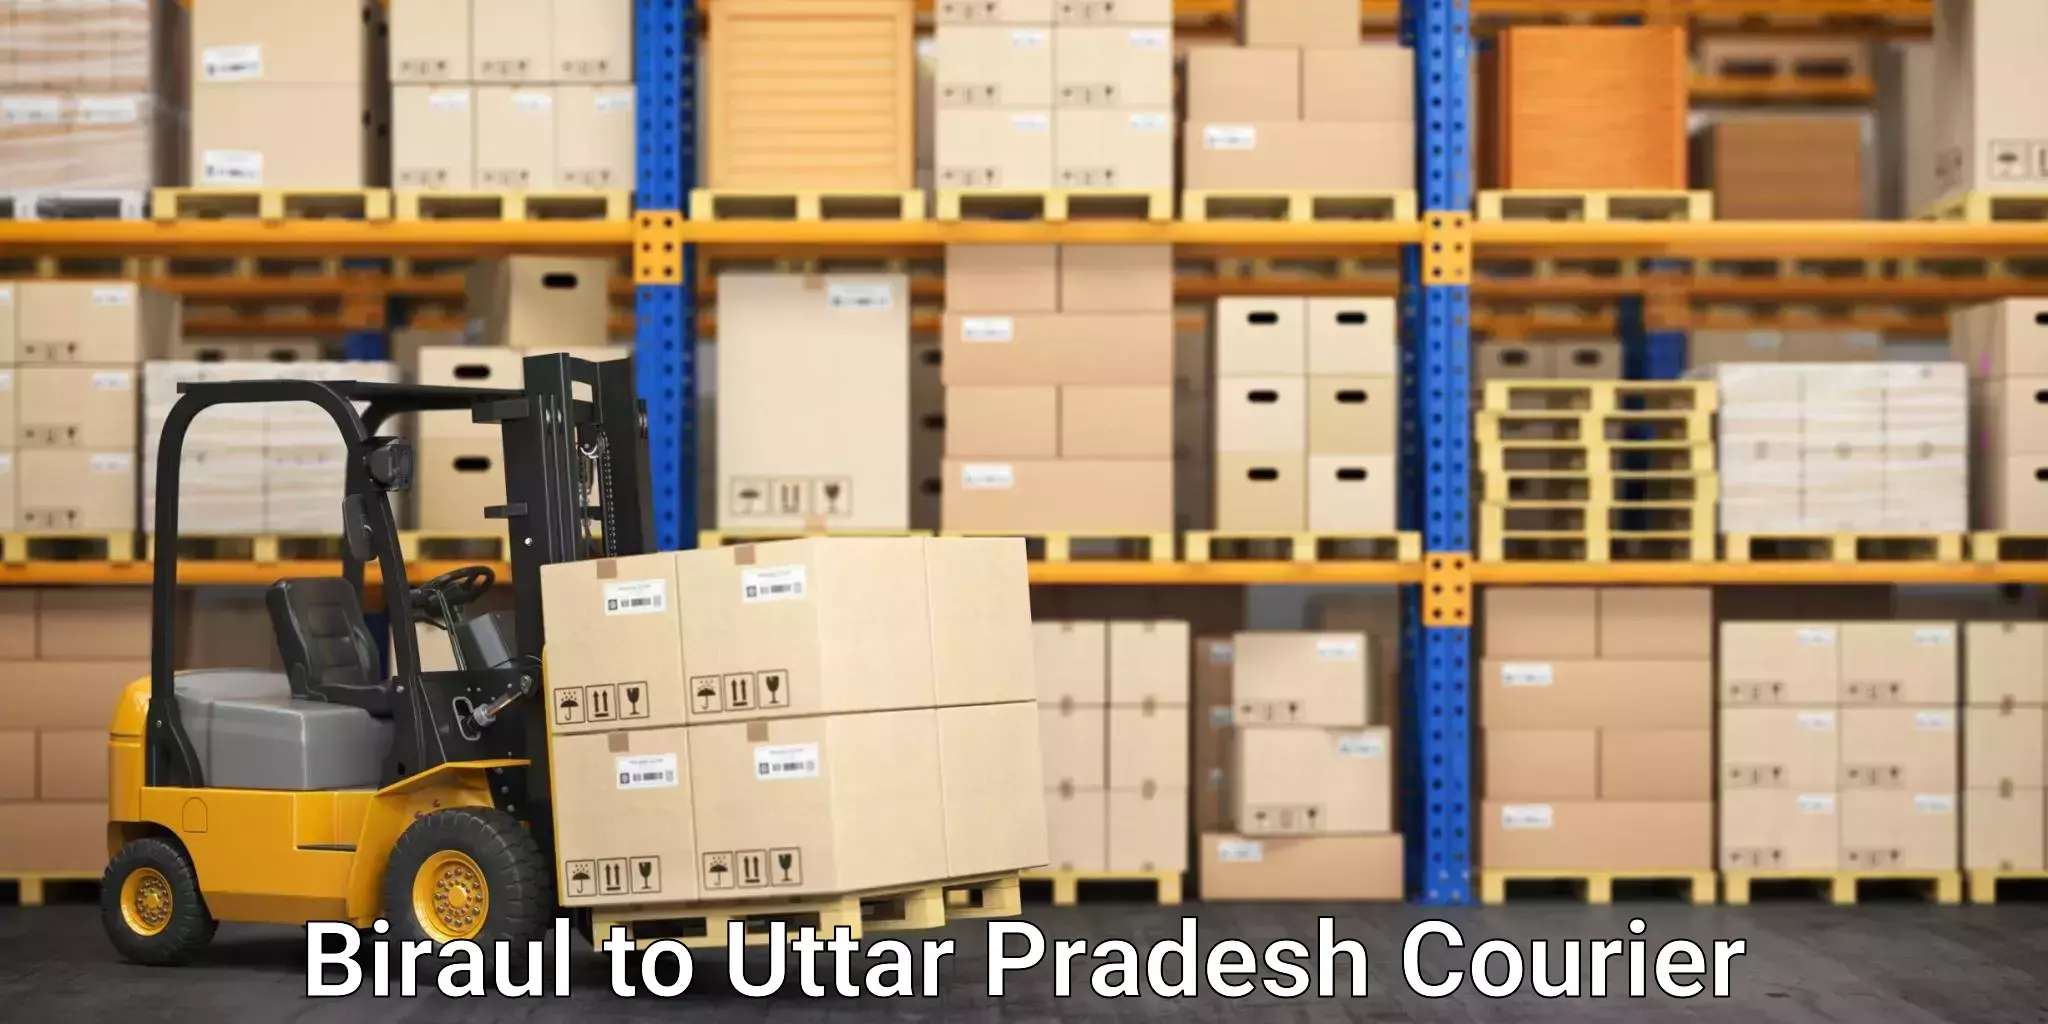 Furniture moving experts in Biraul to Uttar Pradesh